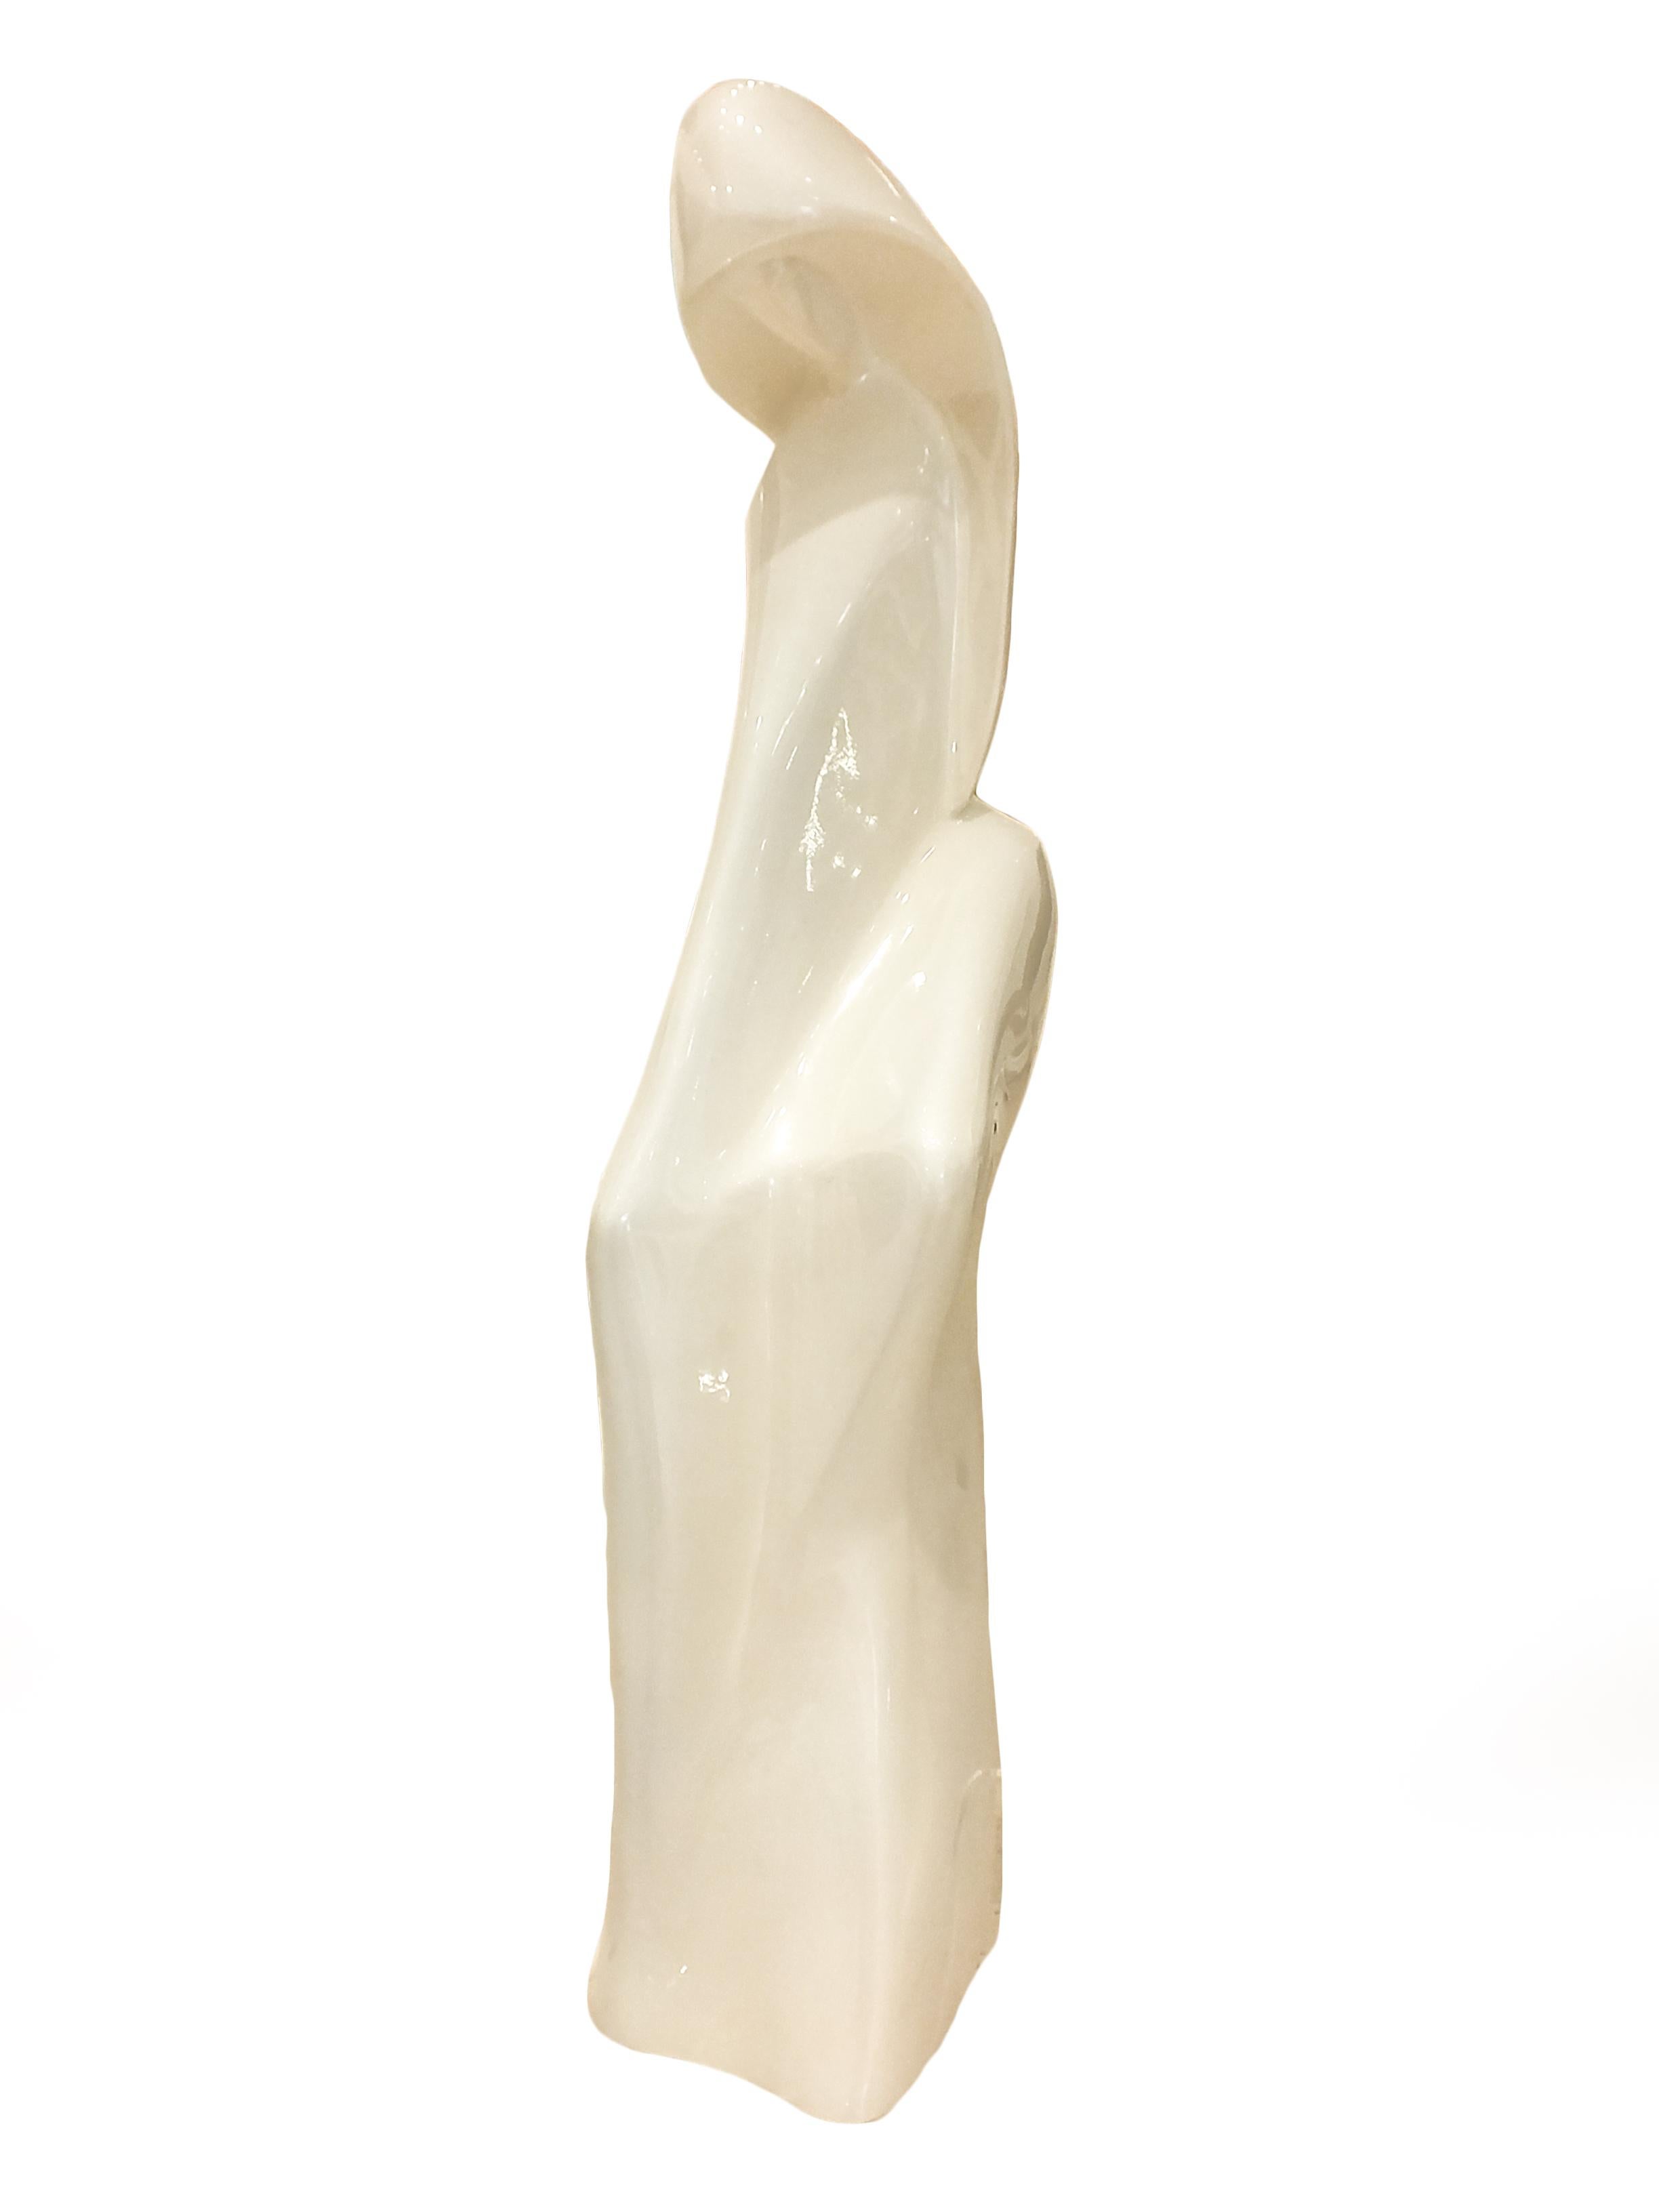 Paul Braslow Figurative Sculpture - Woman-White, Bronze